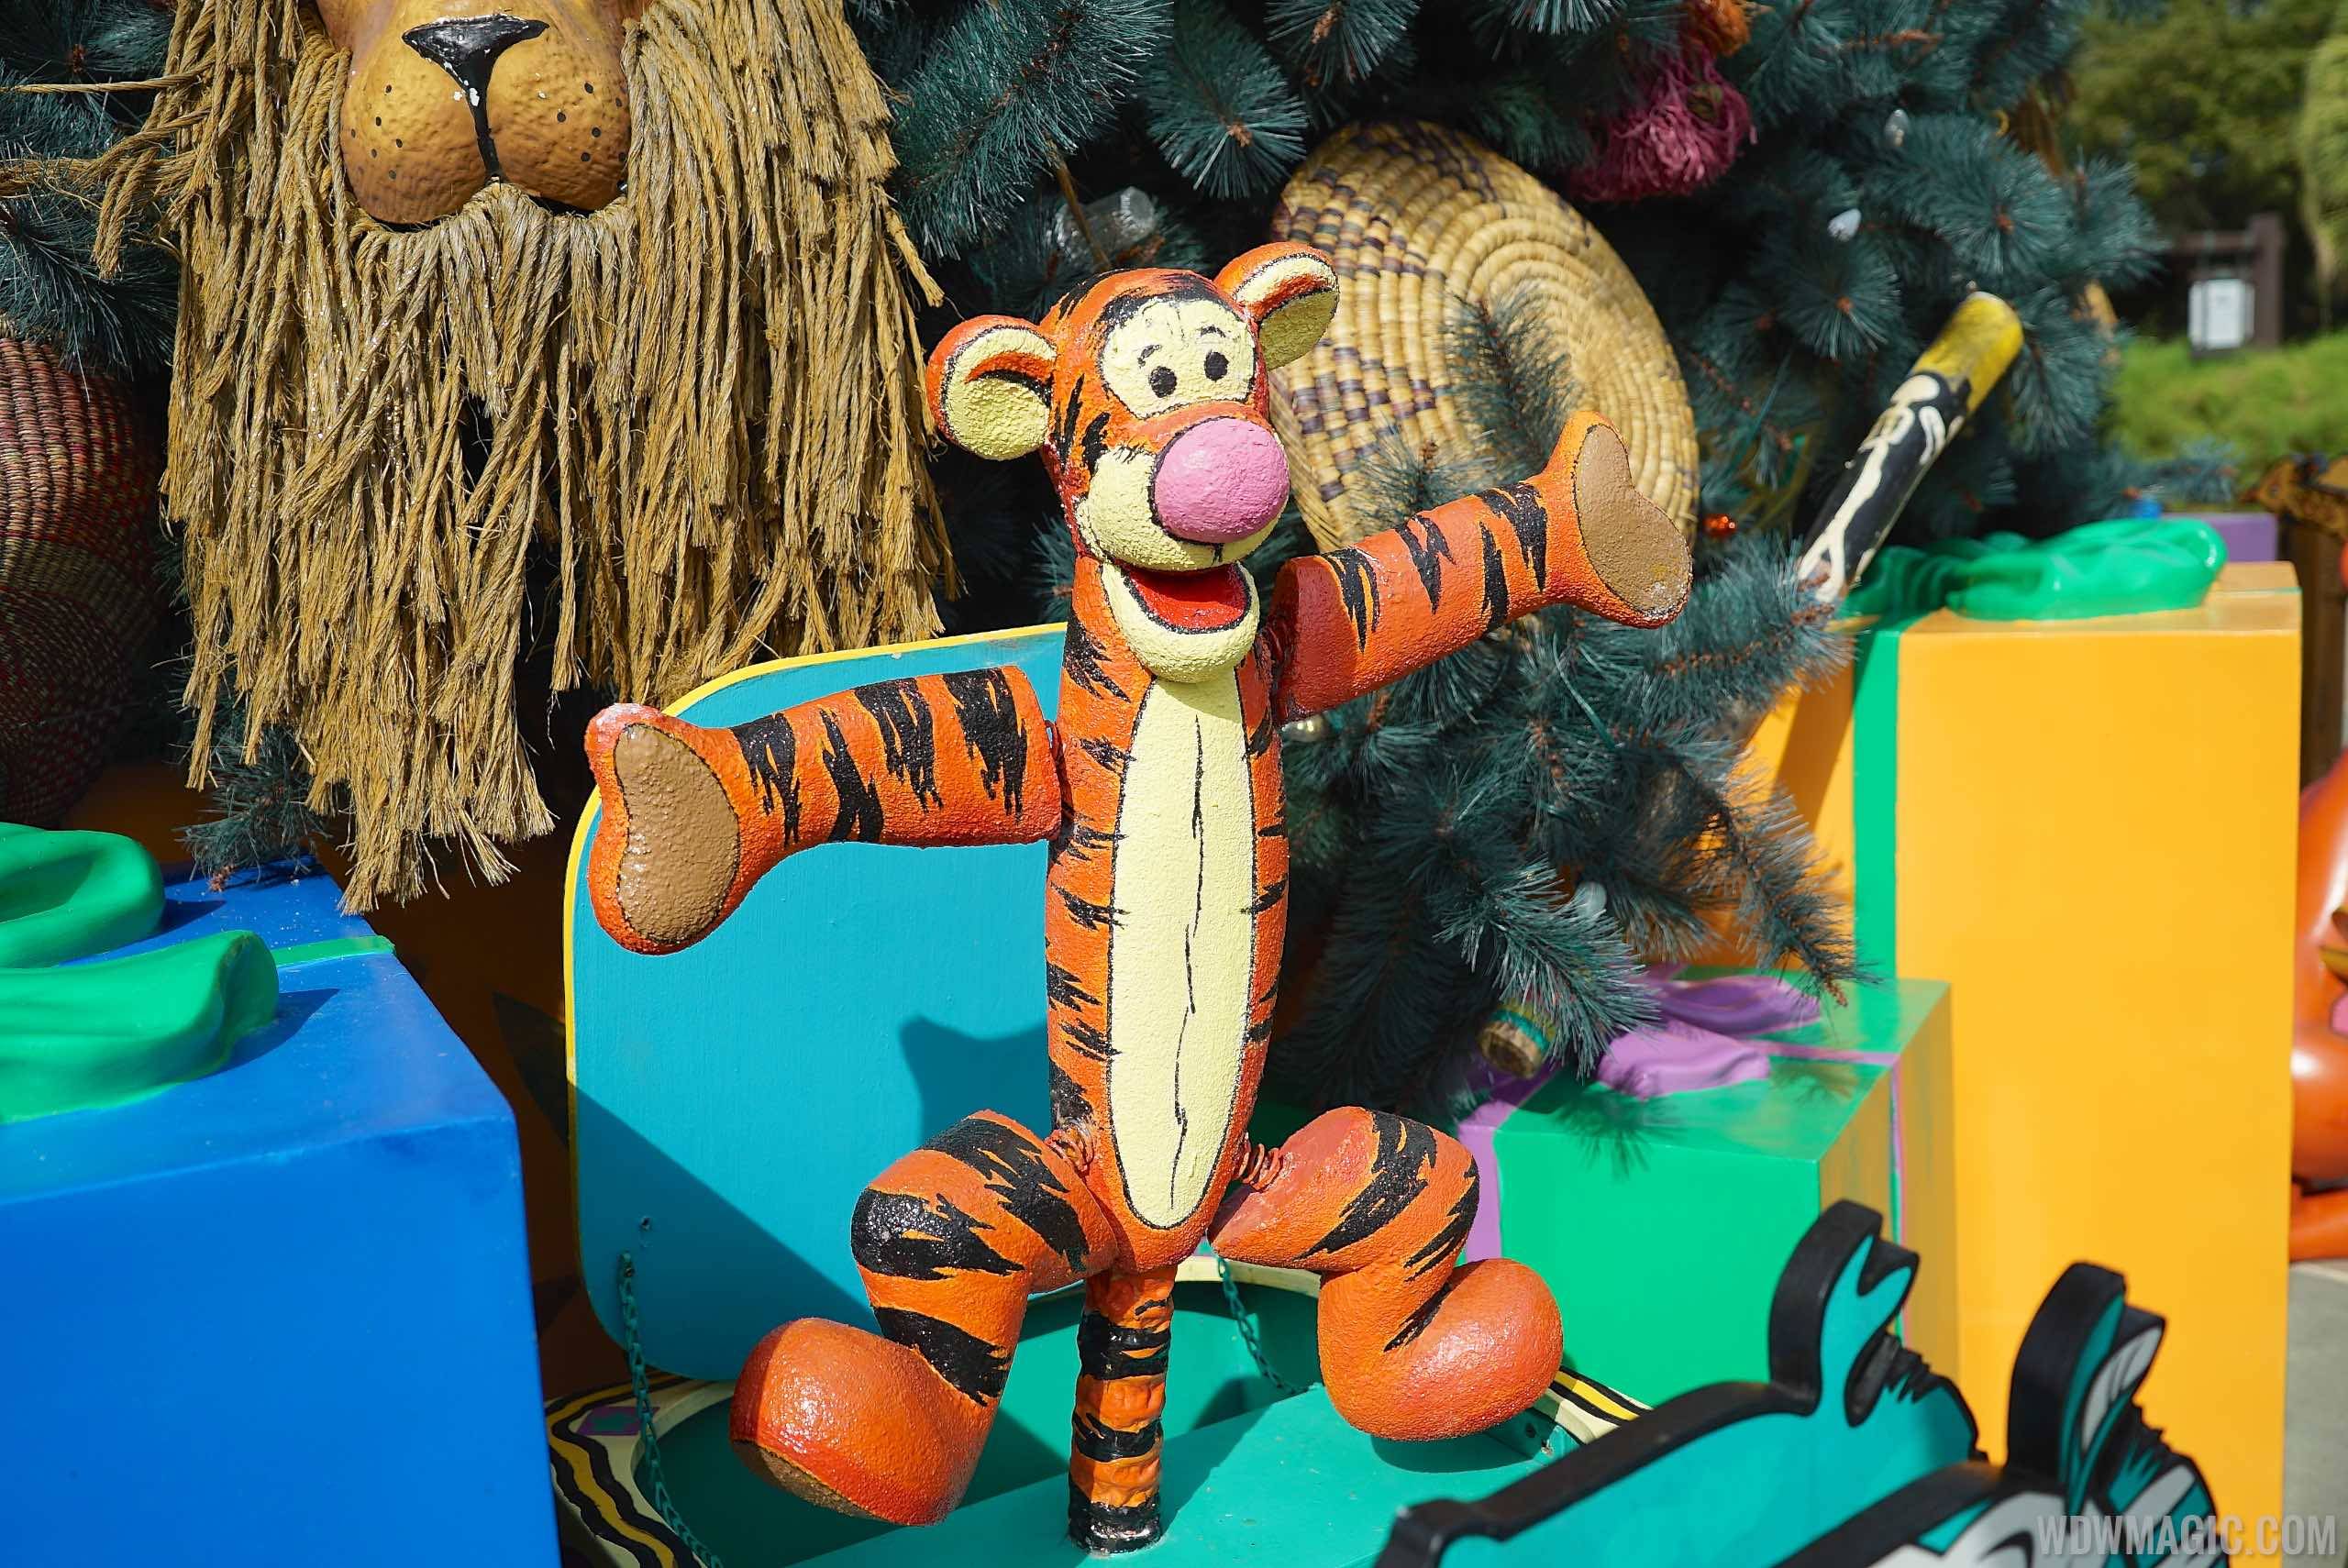 PHOTOS - Holiday decorations now up at Disney's Animal Kingdom